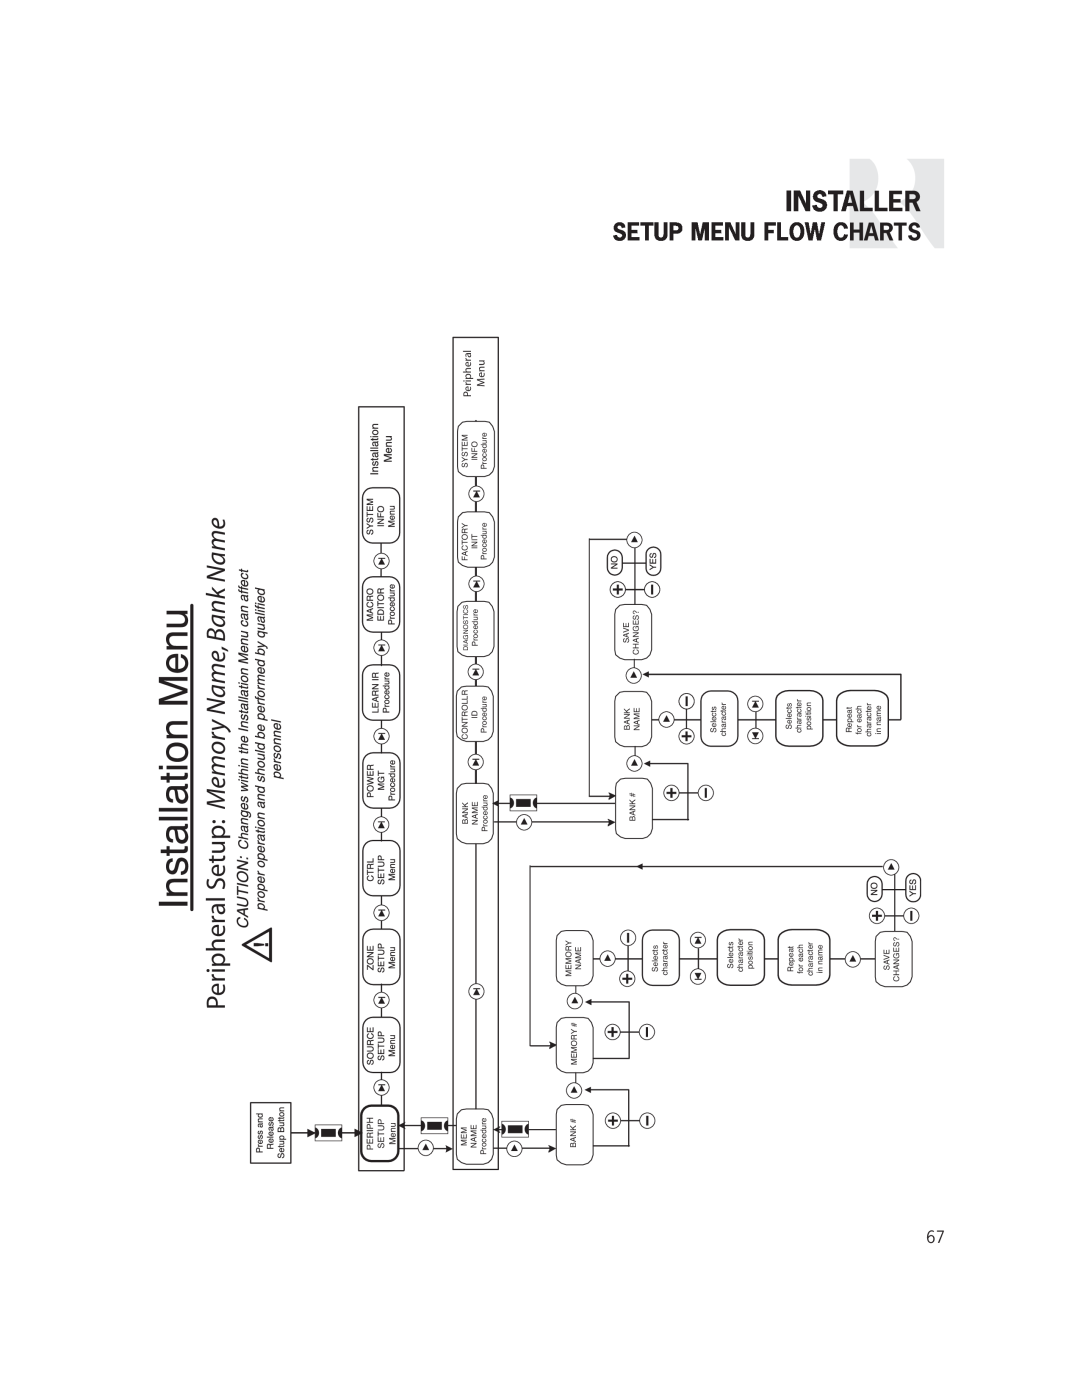 Russound CAM6.6X-S1/S2 instruction manual Installer Setup Menu Flow Charts, Peripheral Setup: Memory Name, Bank Name 